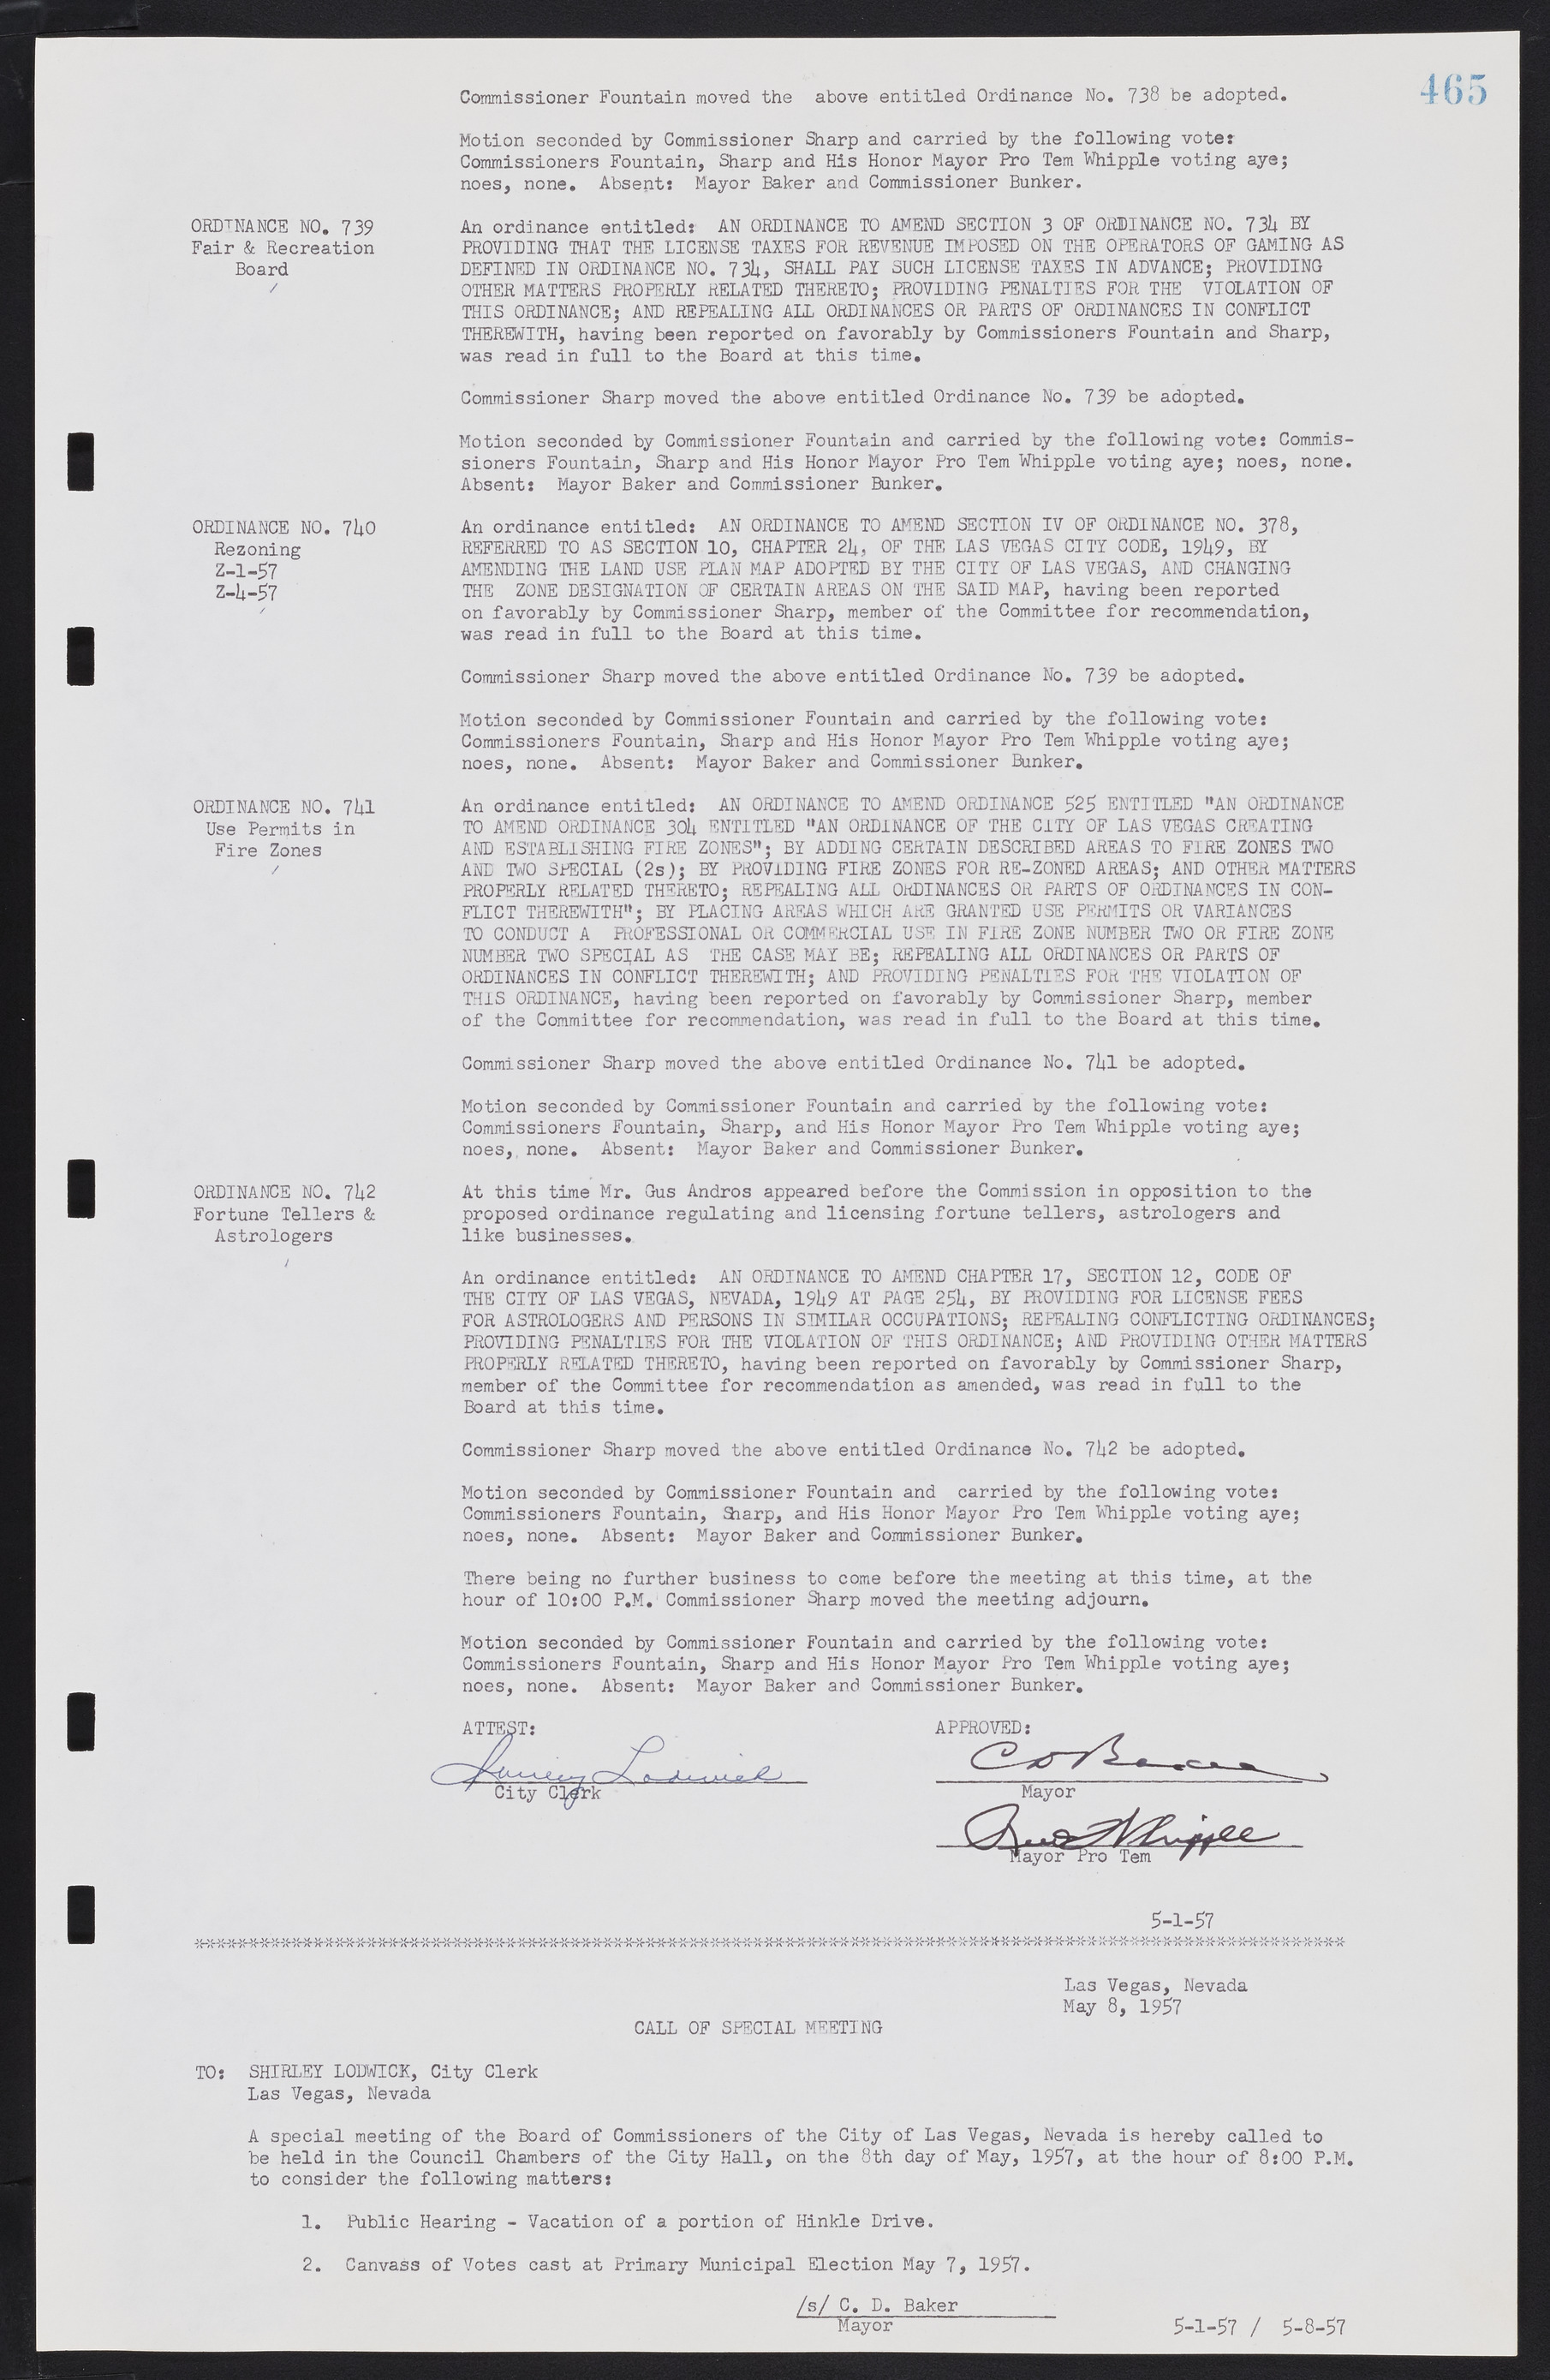 Las Vegas City Commission Minutes, September 21, 1955 to November 20, 1957, lvc000010-485